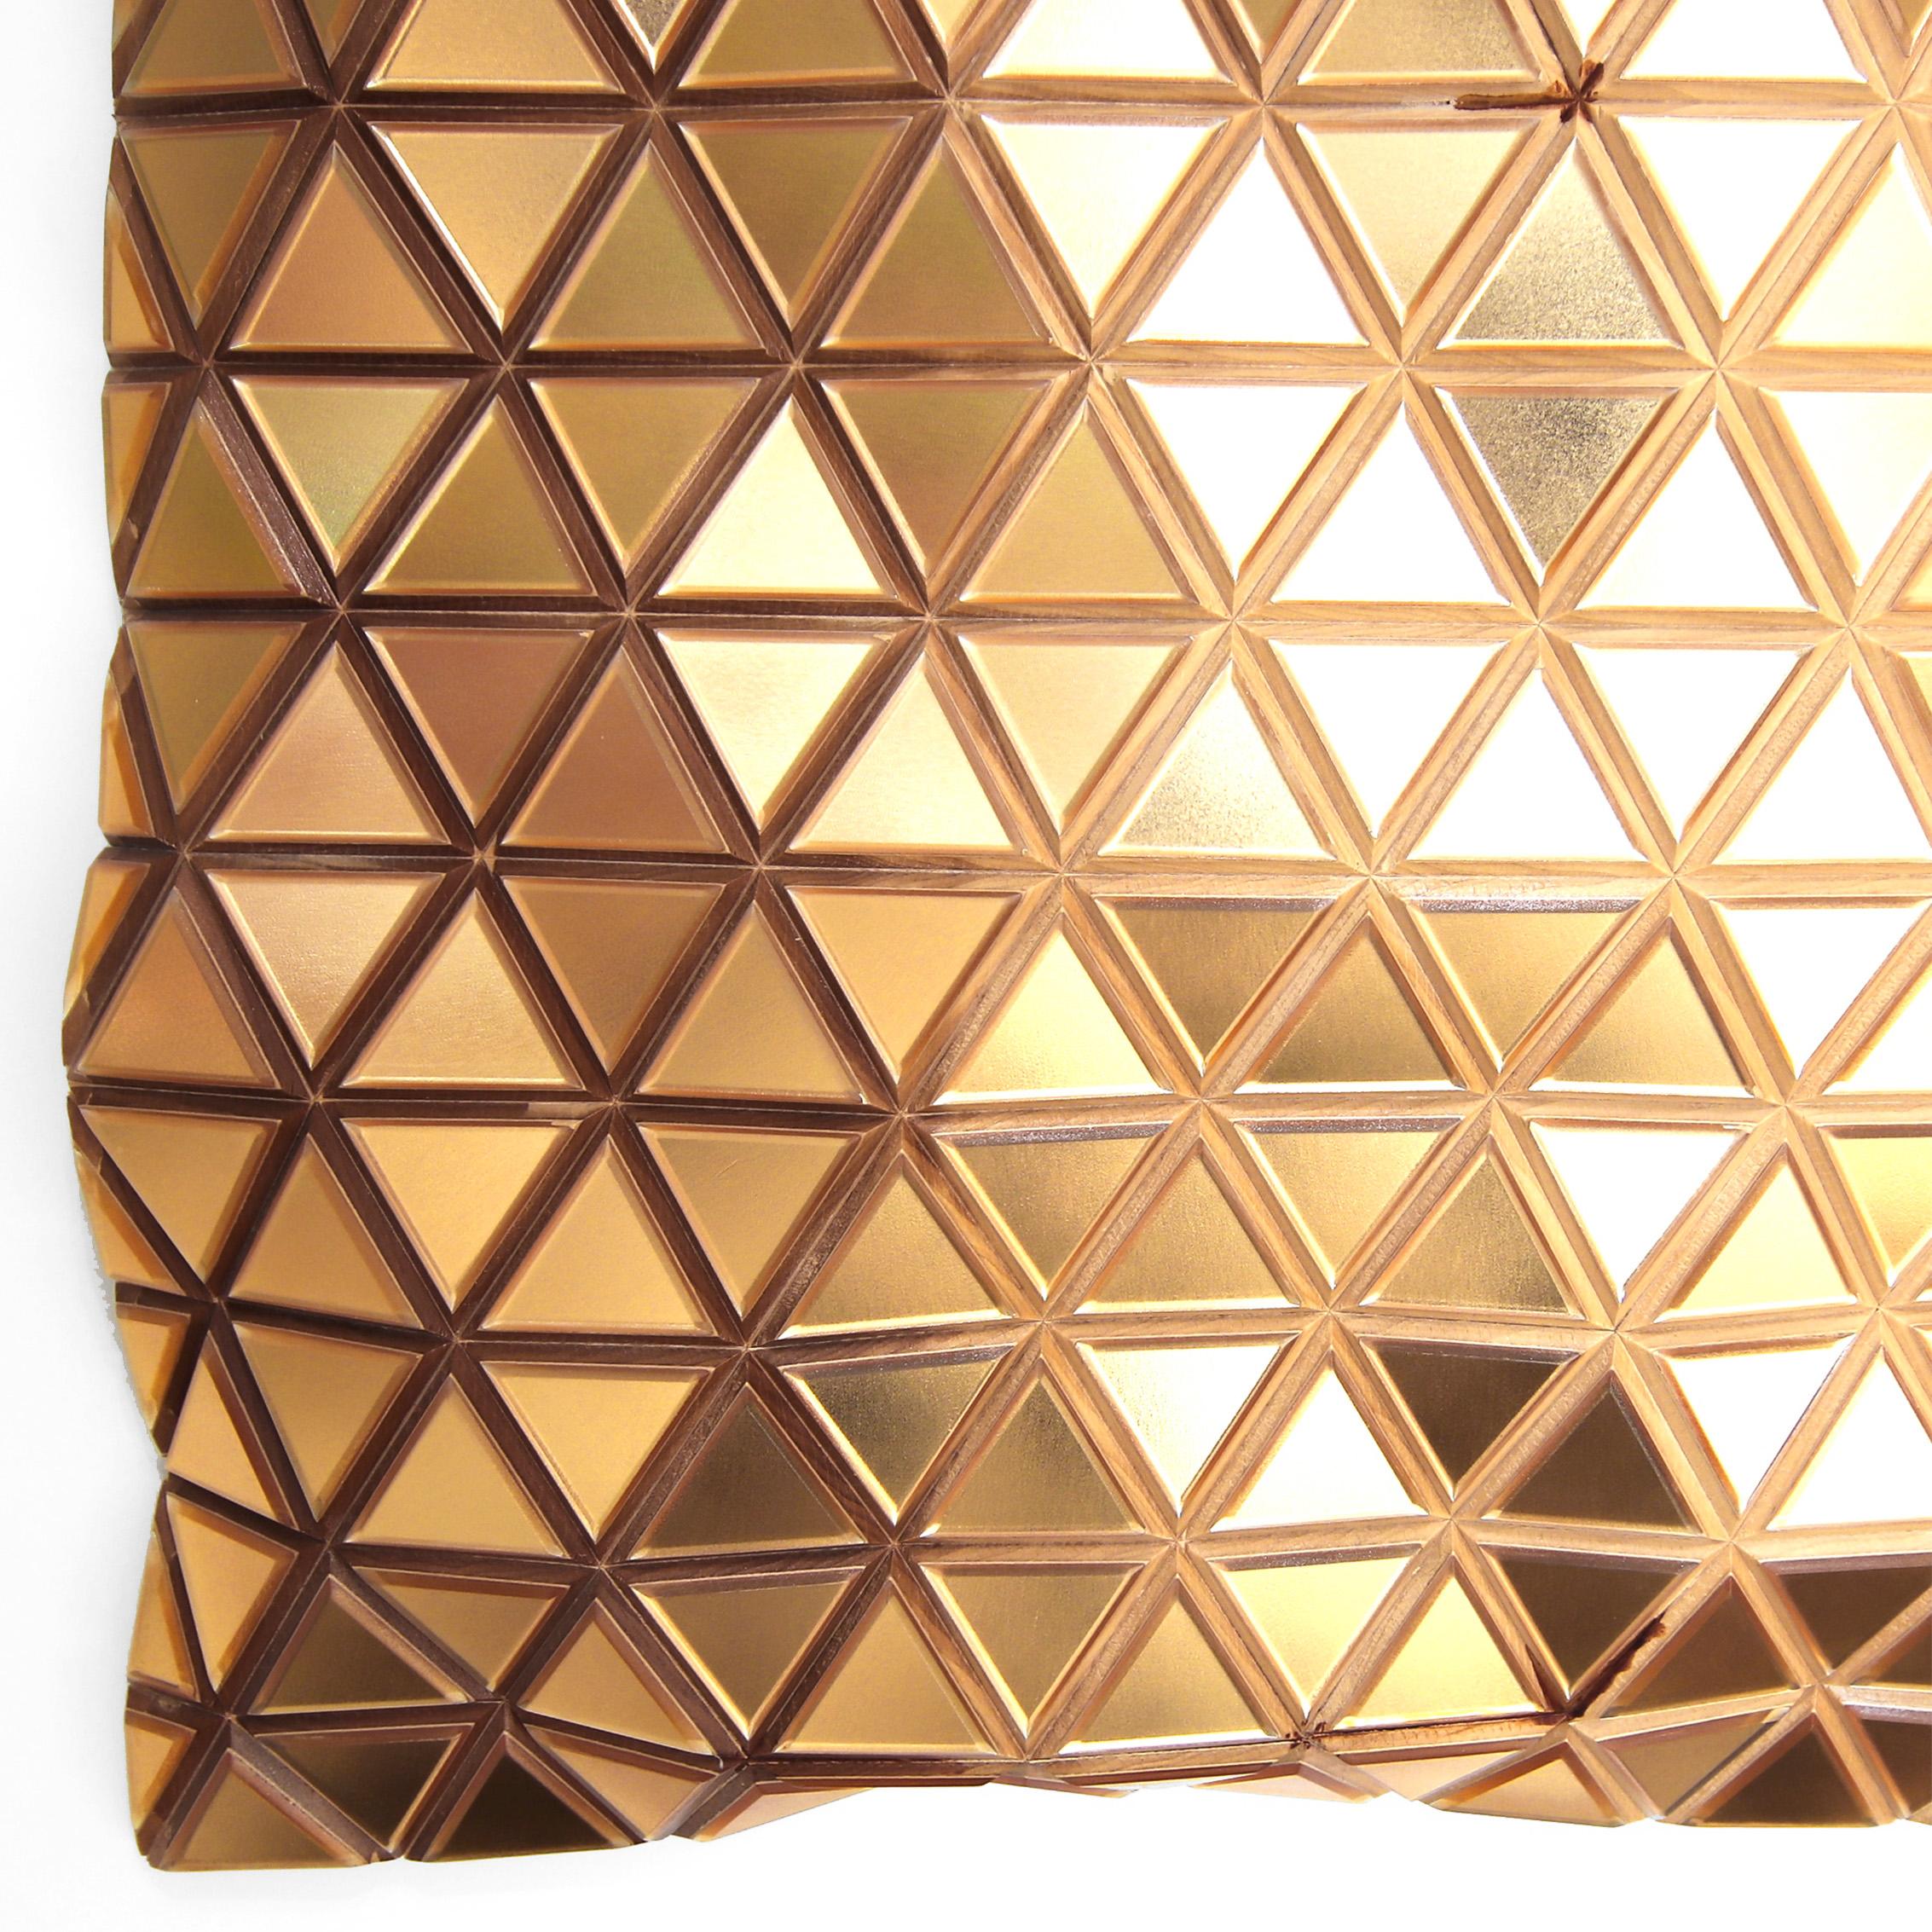 El Dorado - Sculptural Geometric Abstract Gold Wall Artwork - Brown Abstract Sculpture by Hugo Urrutia